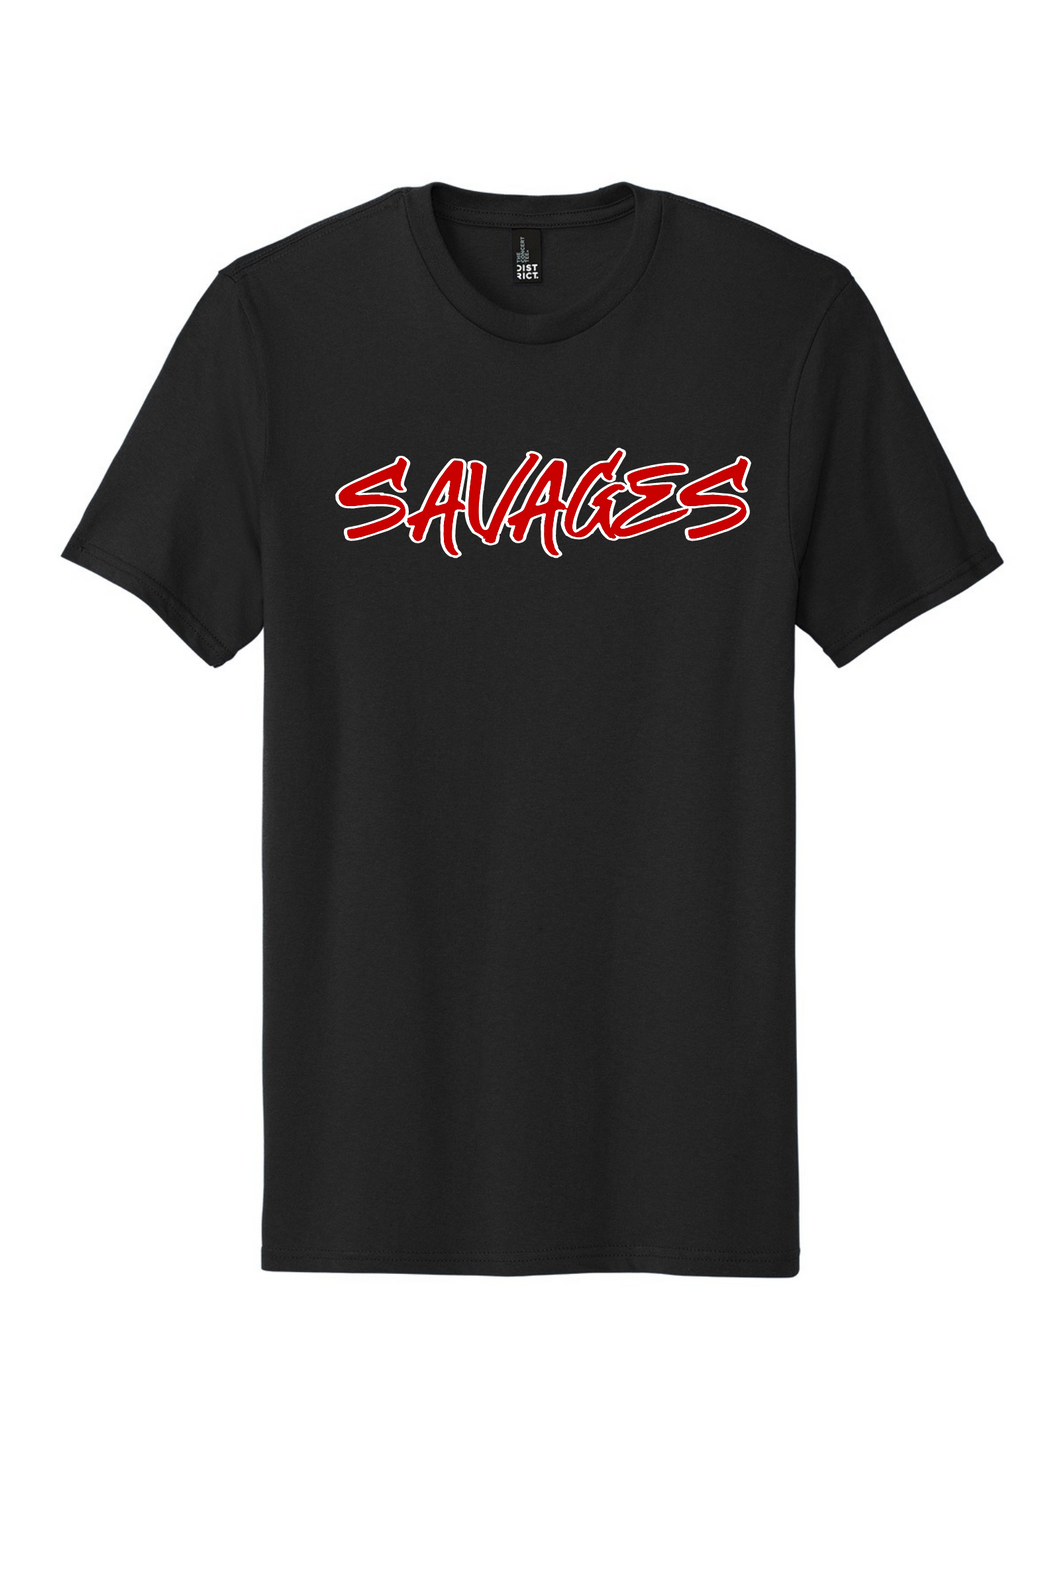 Savages T-Shirt (Female)